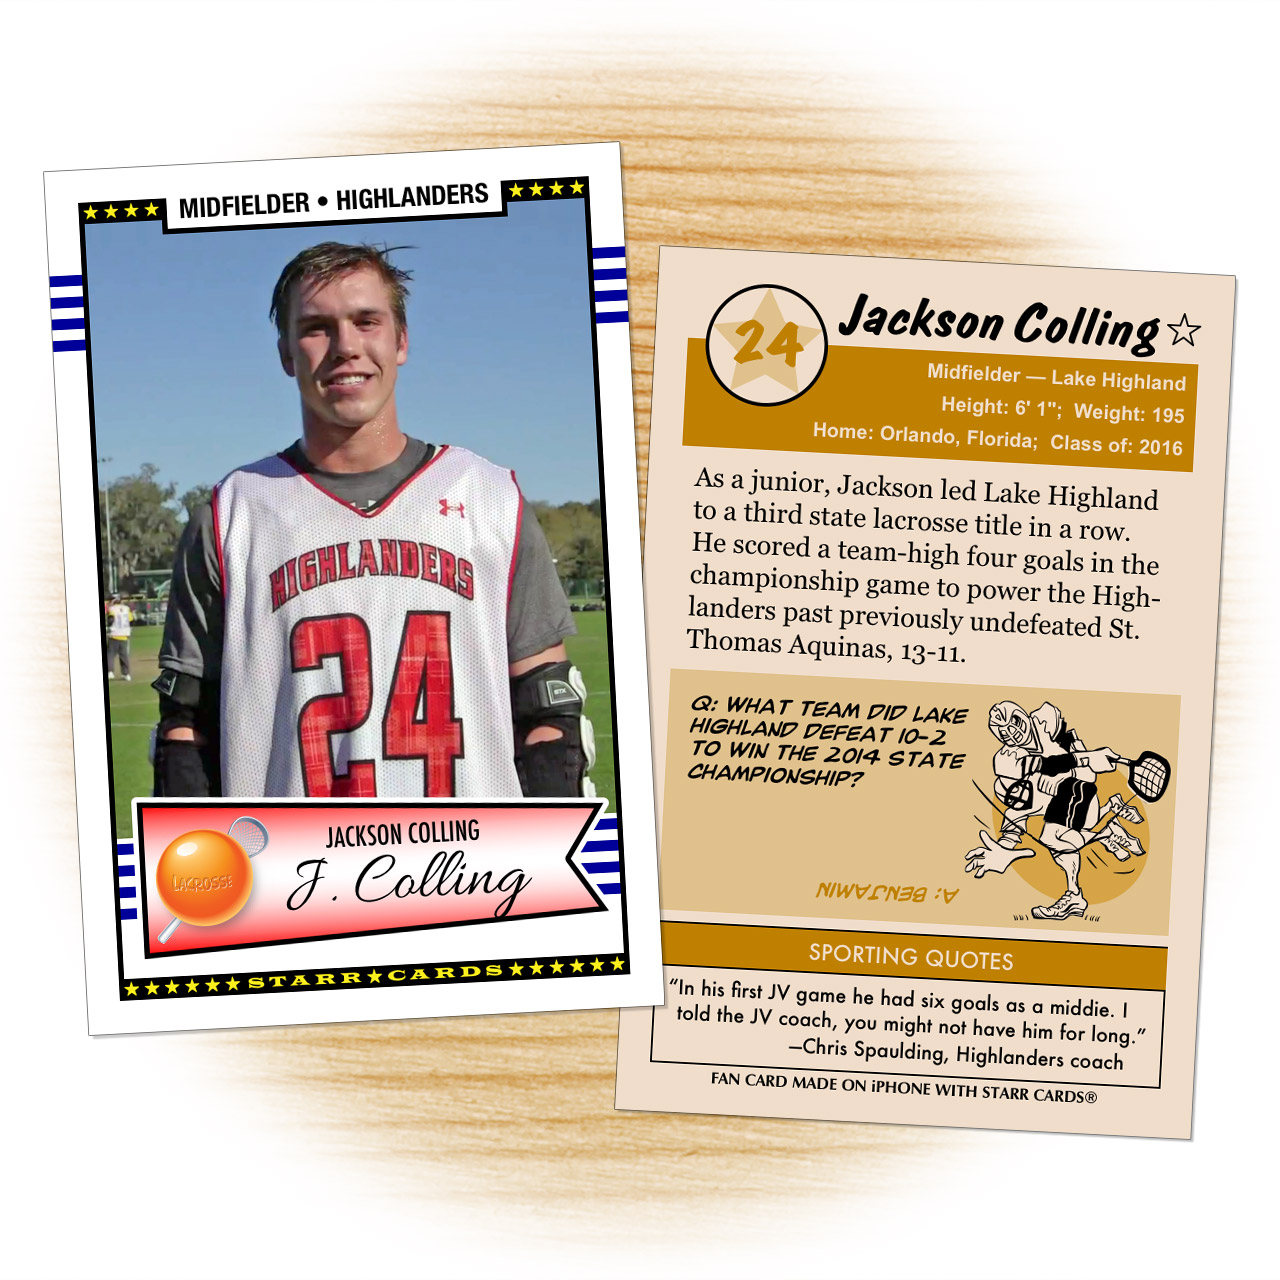 Fan card of Lake Highland Highlanders lacrosse midfielder Jackson Colling